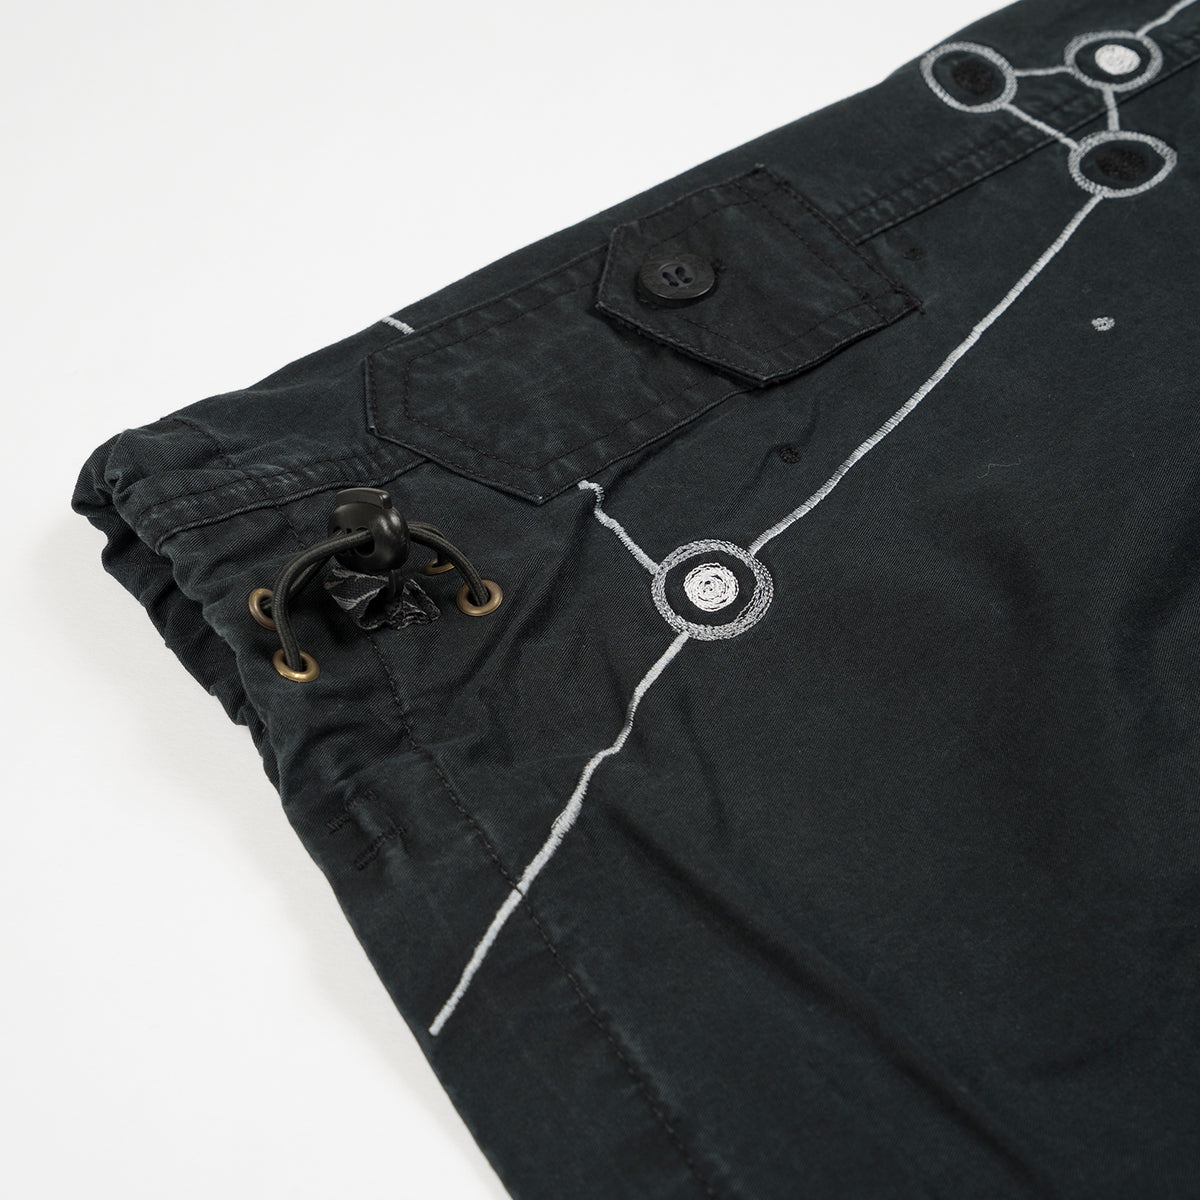 maharishi | Original Snopants Constellation Embroidery Black - Concrete